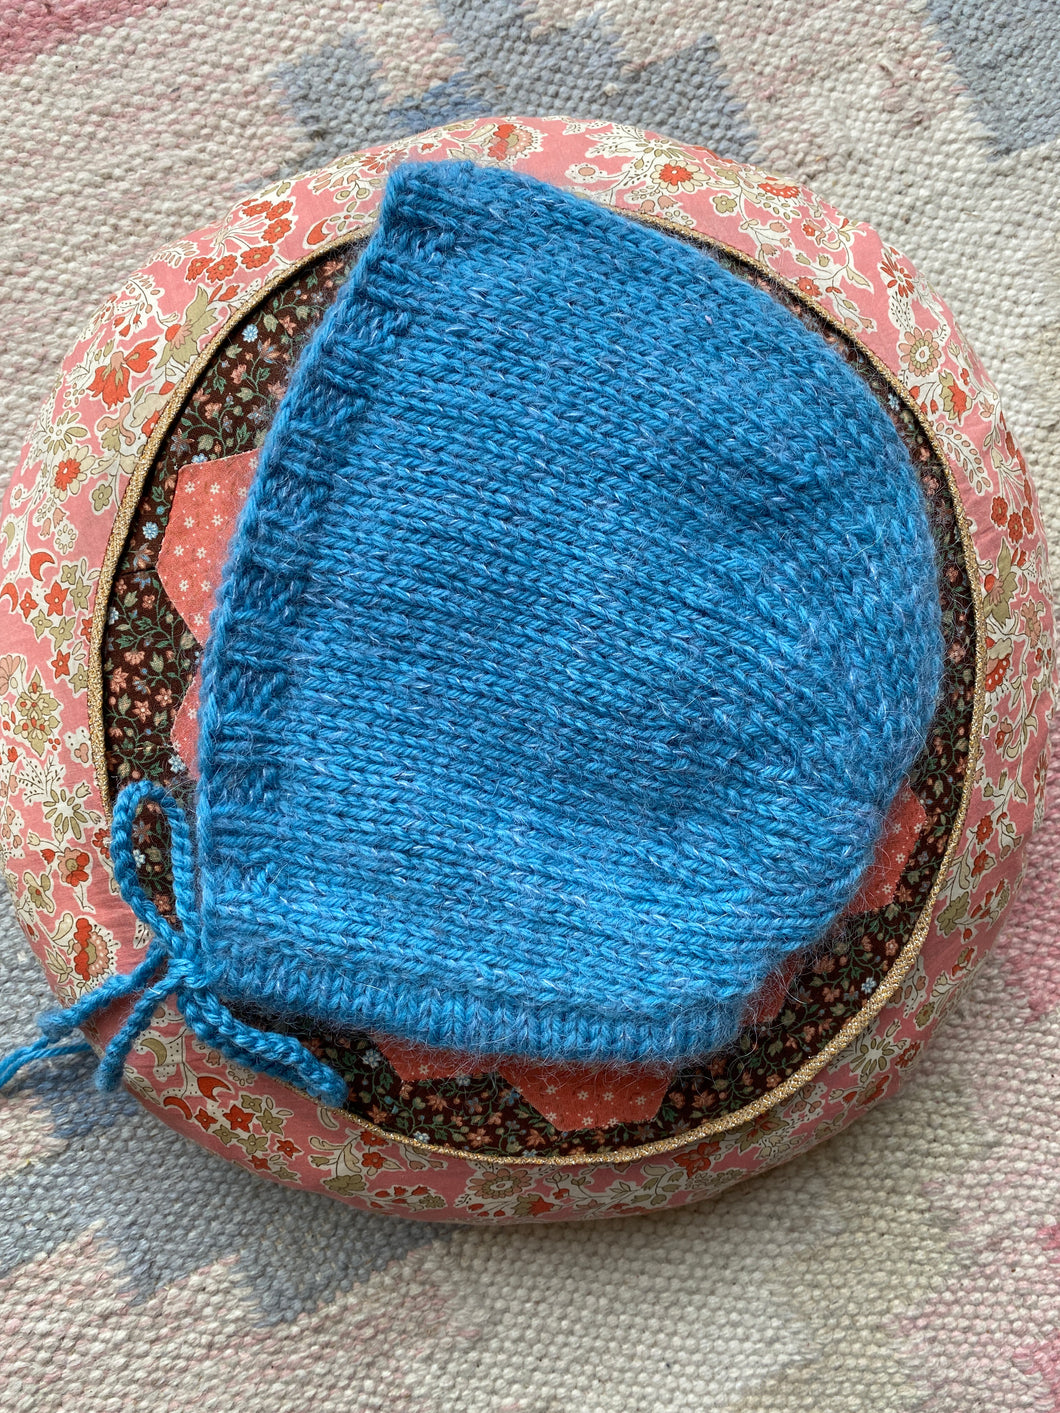 Deima’s bonnet - knitting pattern (norsk)